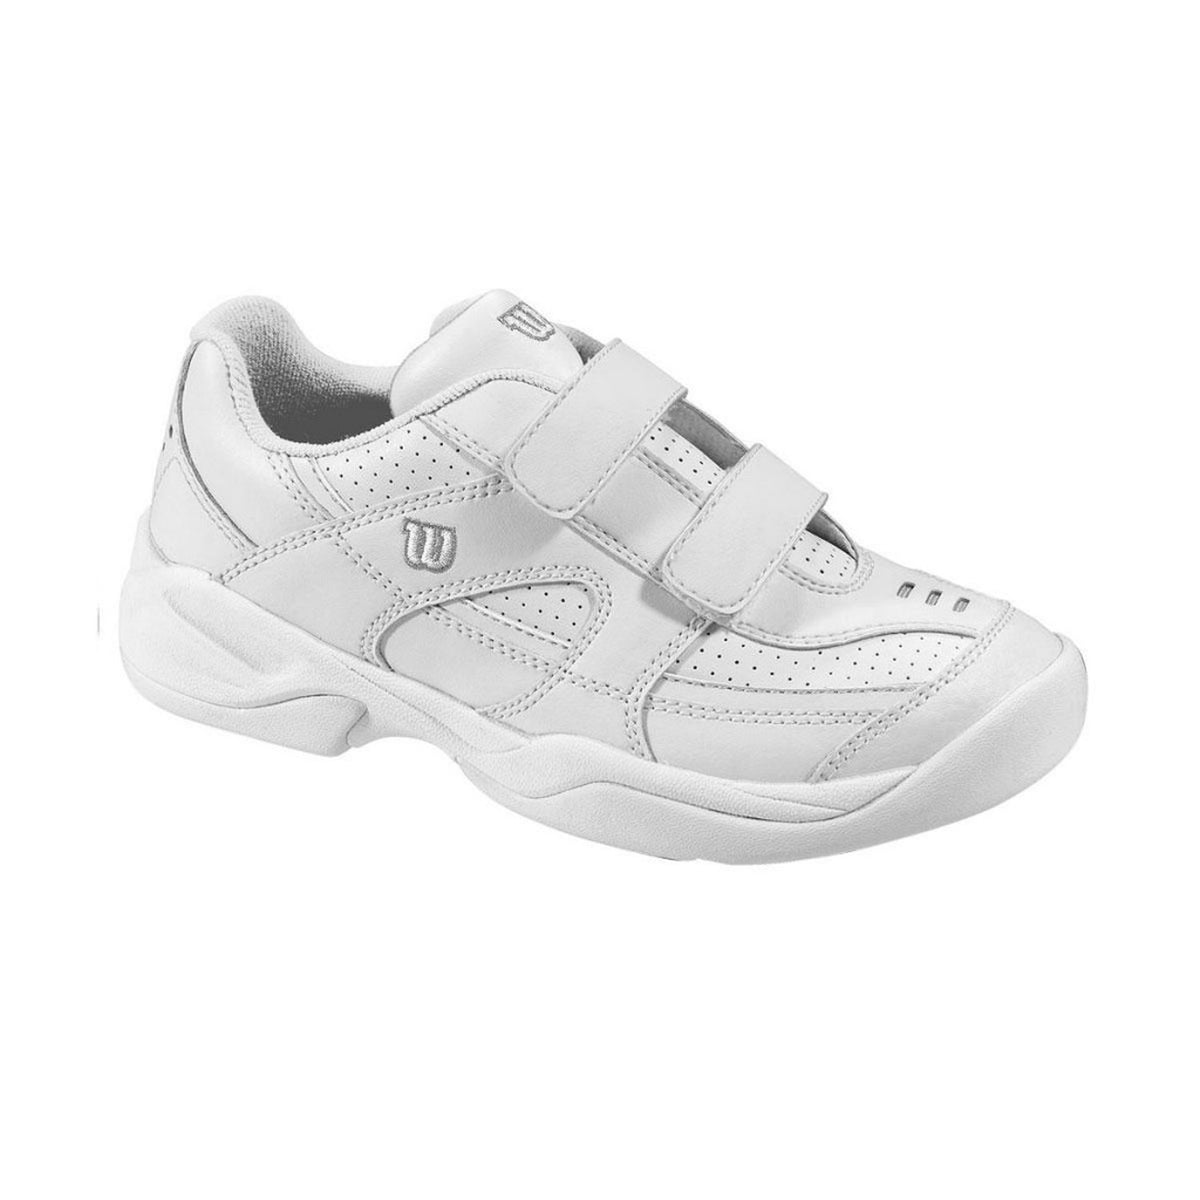 Wilson Advantage Court III Velcro Jr Tennis Shoes - RRP £29.99